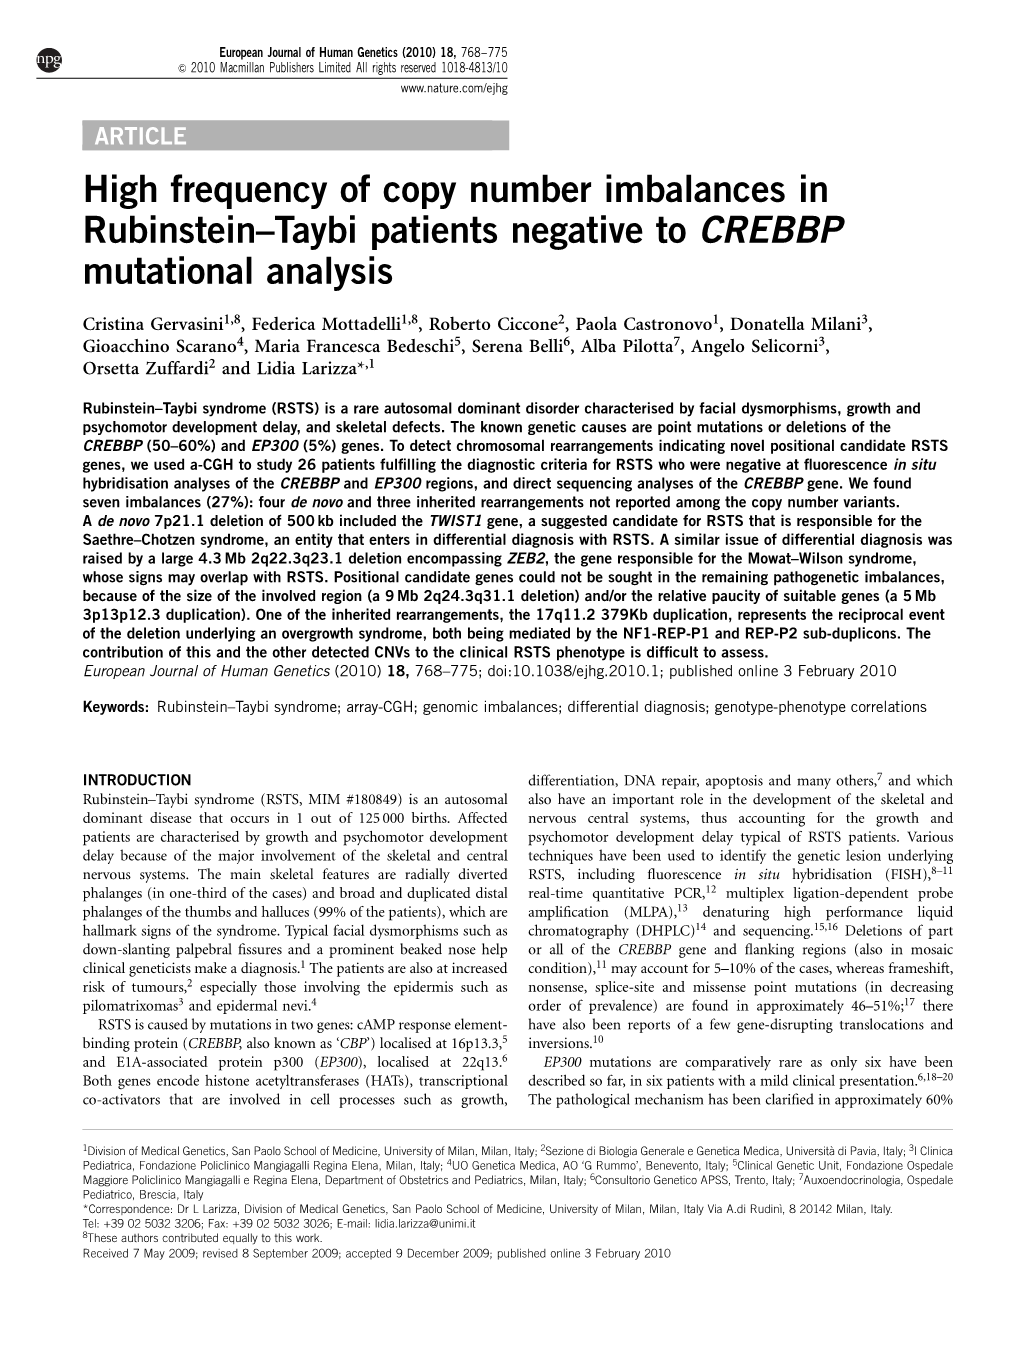 Taybi Patients Negative to CREBBP Mutational Analysis